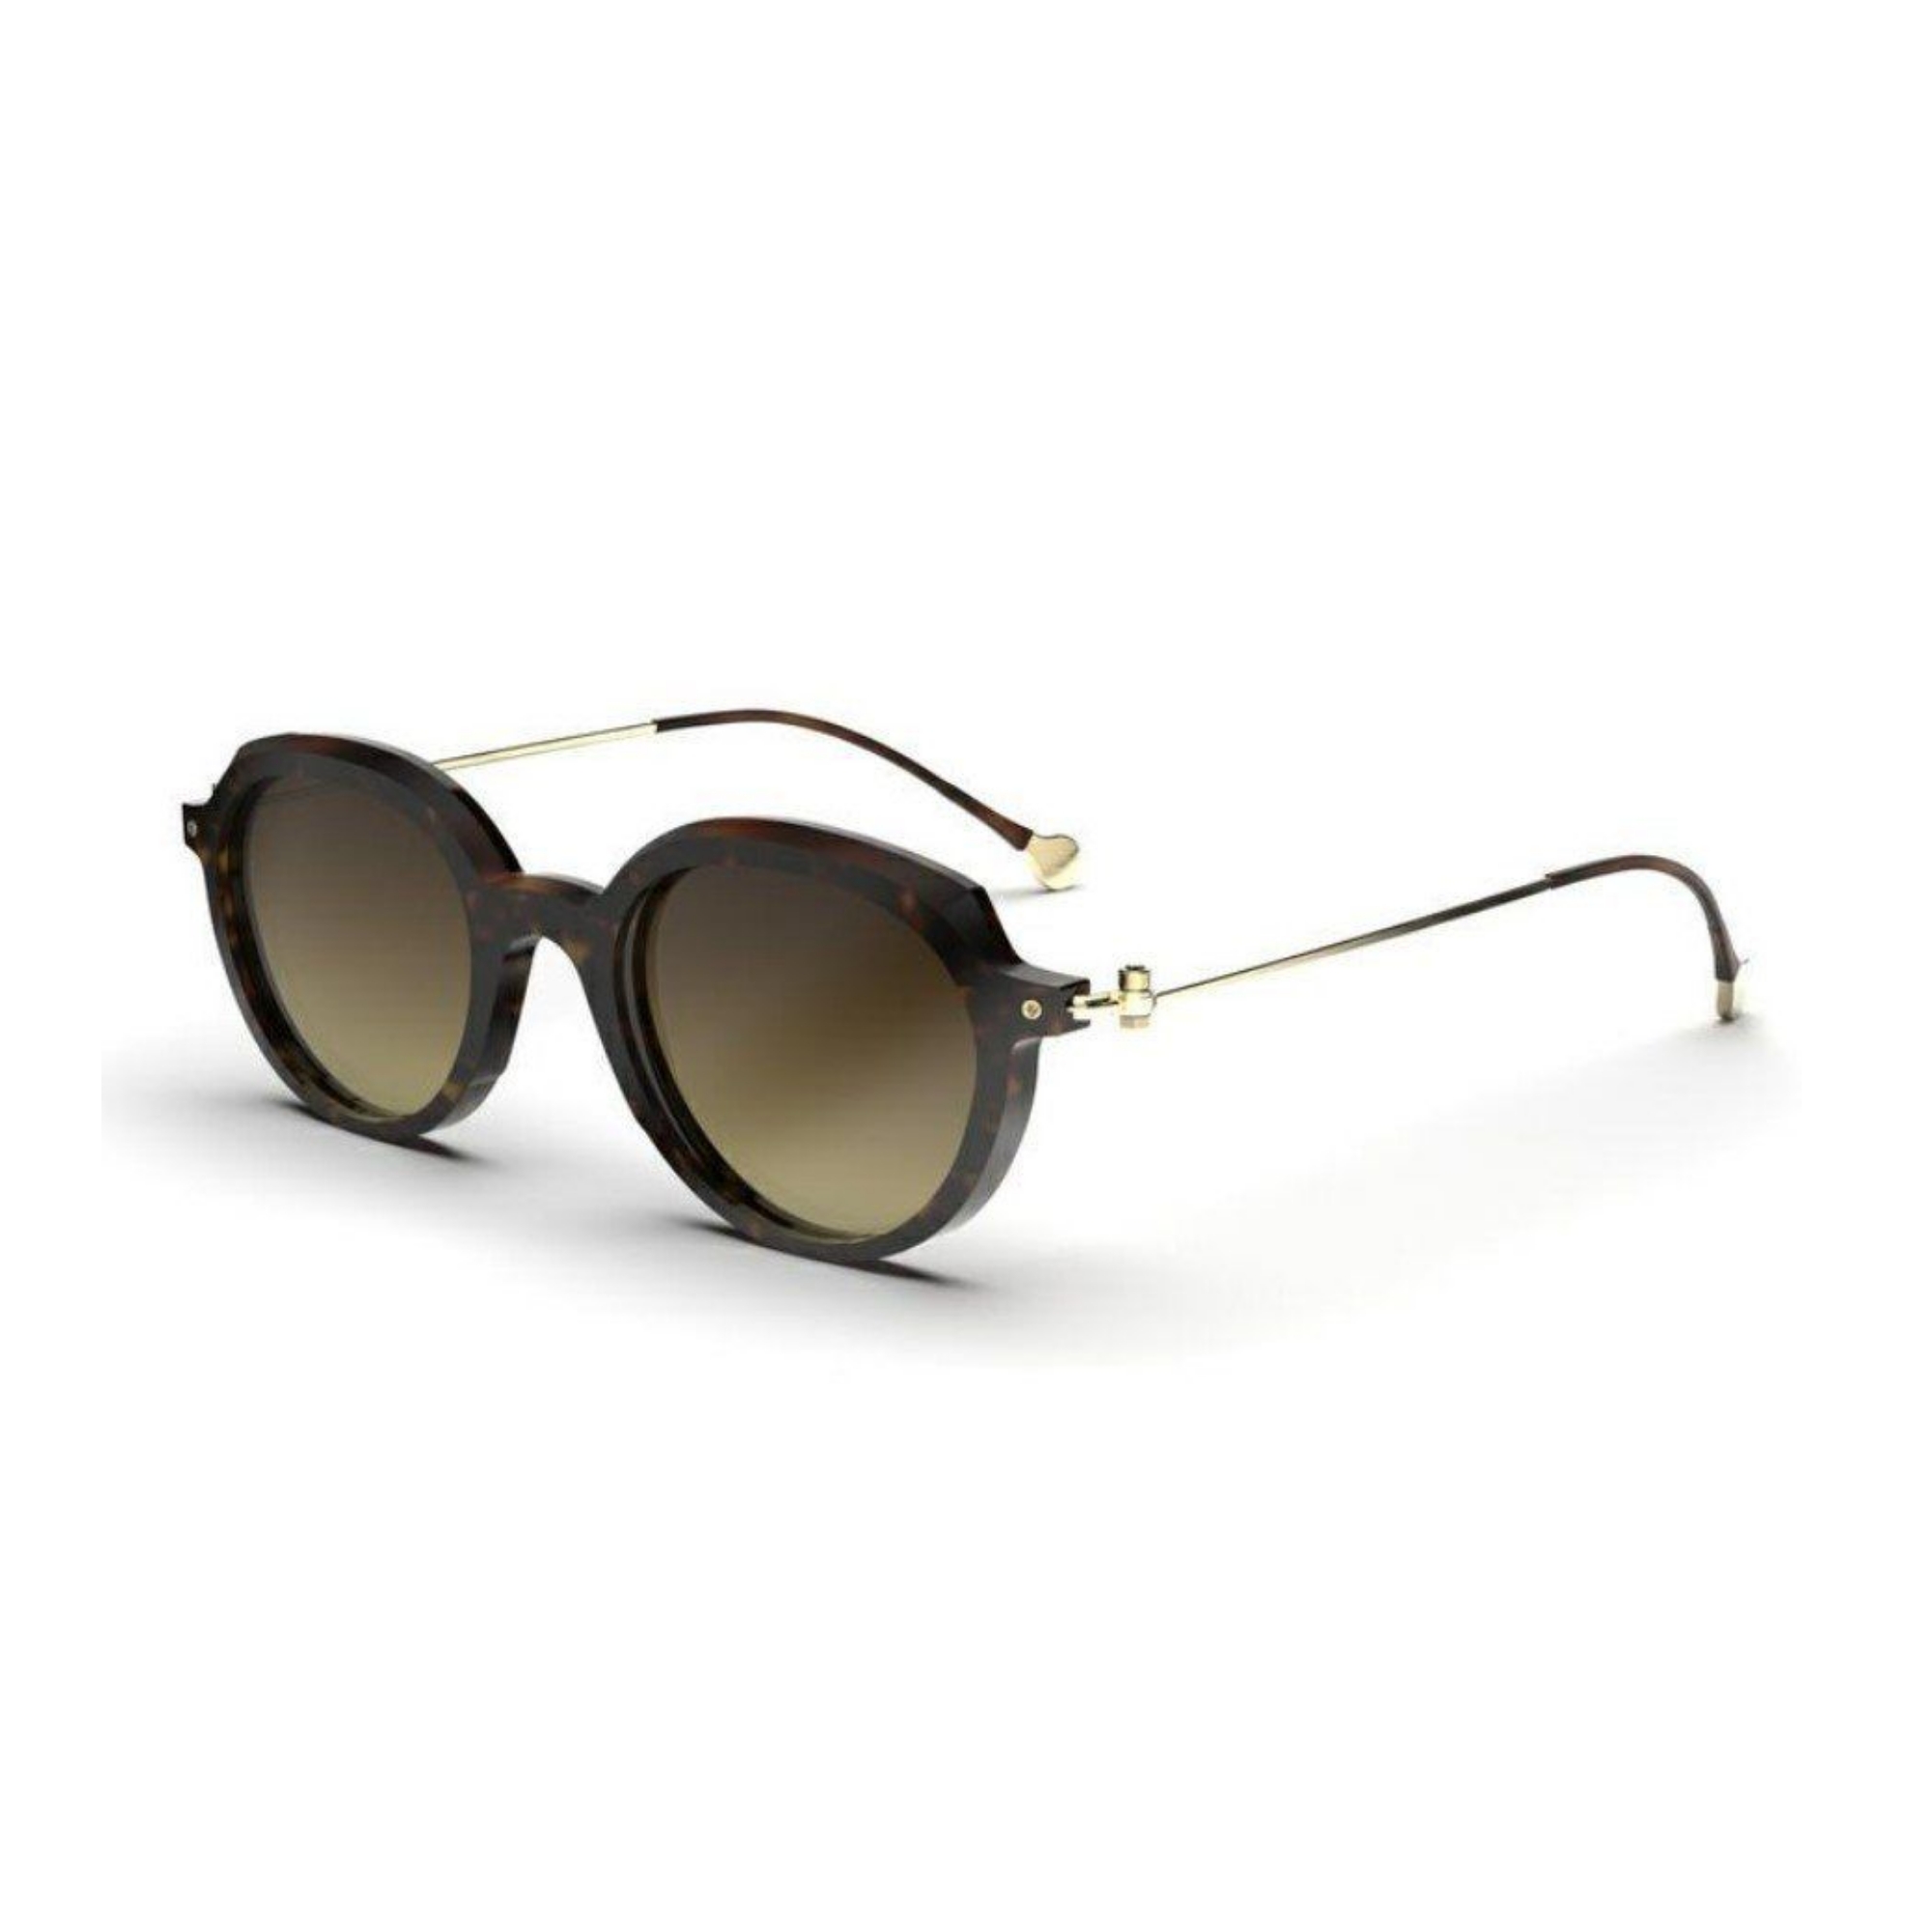 Солнцезащитные очки Yohji Yamamoto